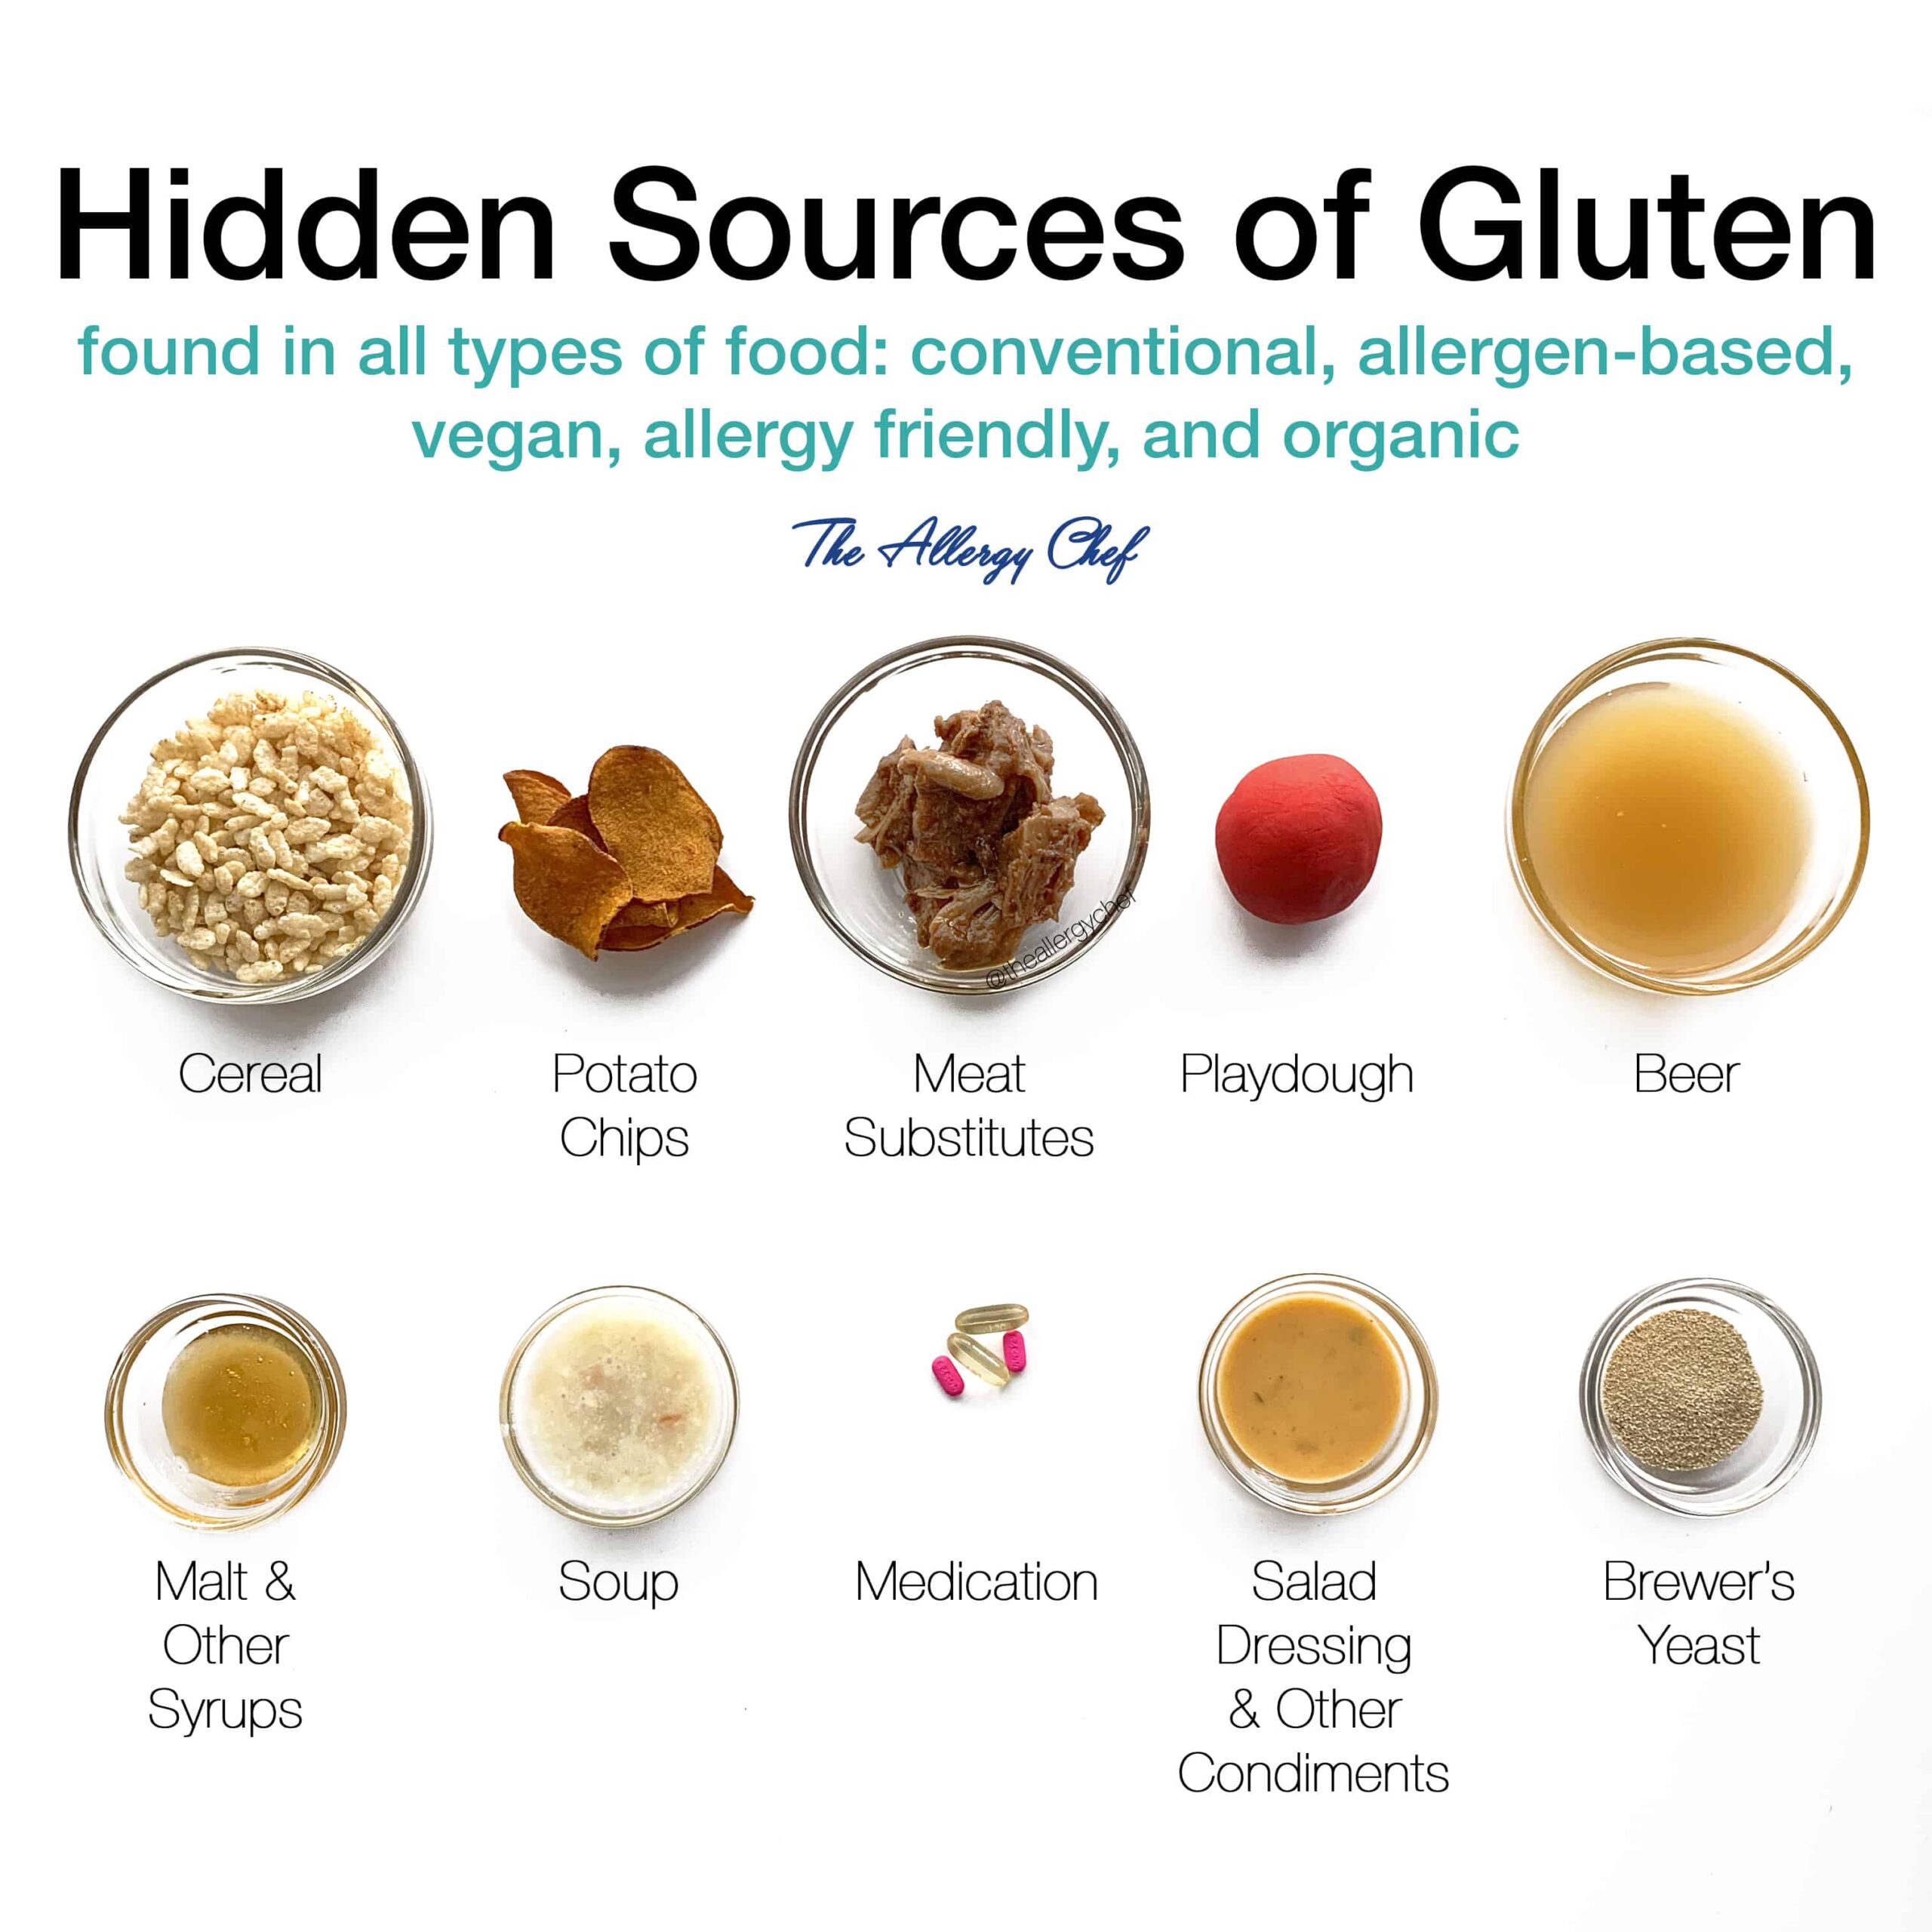 Hidden Sources of Gluten and Hidden Sources of Wheat